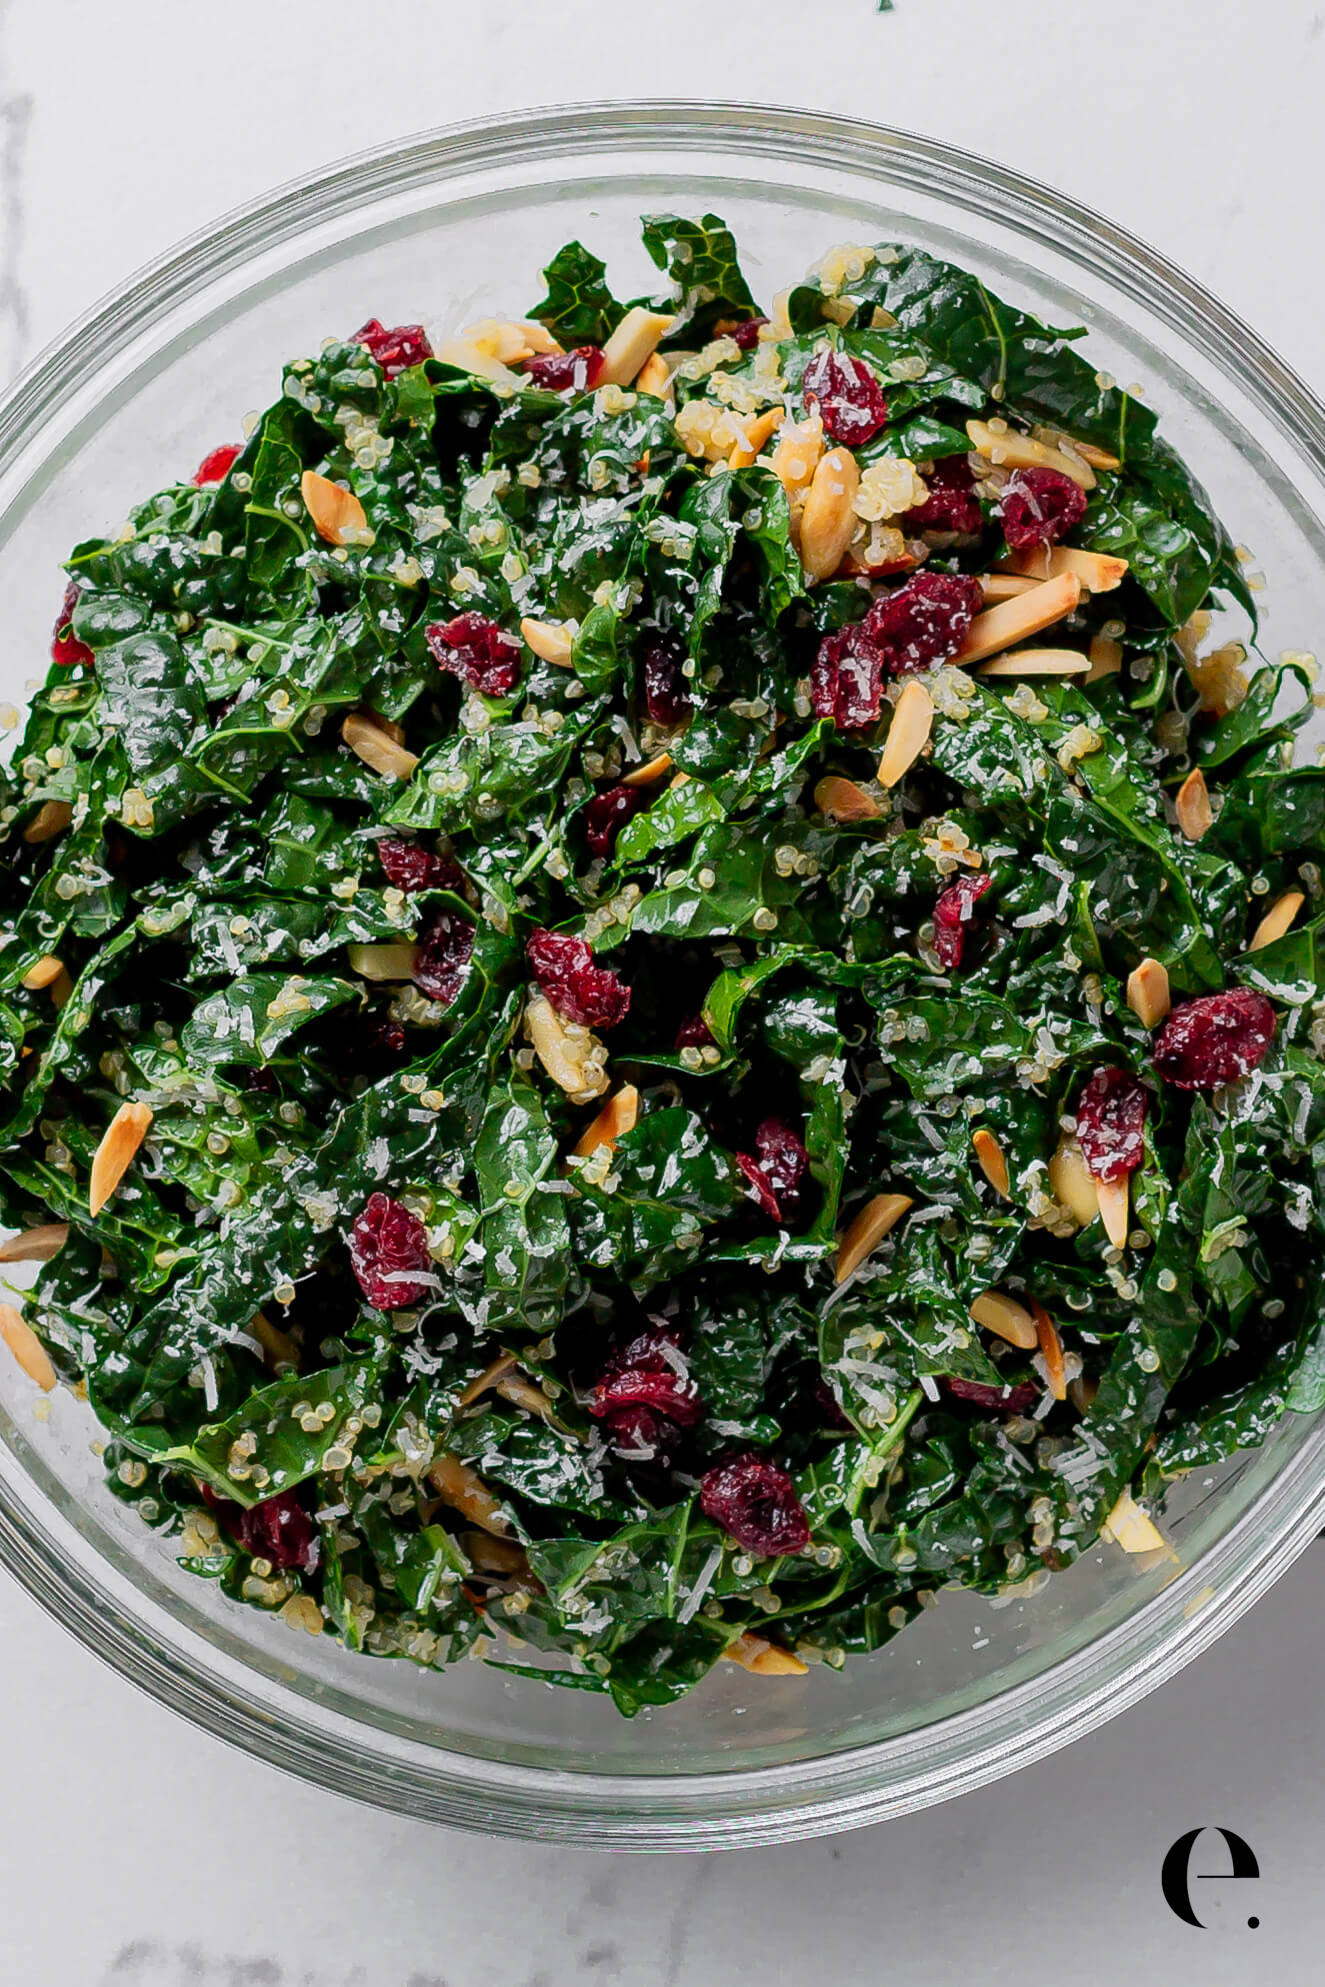 Cranberry, Kale & Quinoa Salad Ingredients